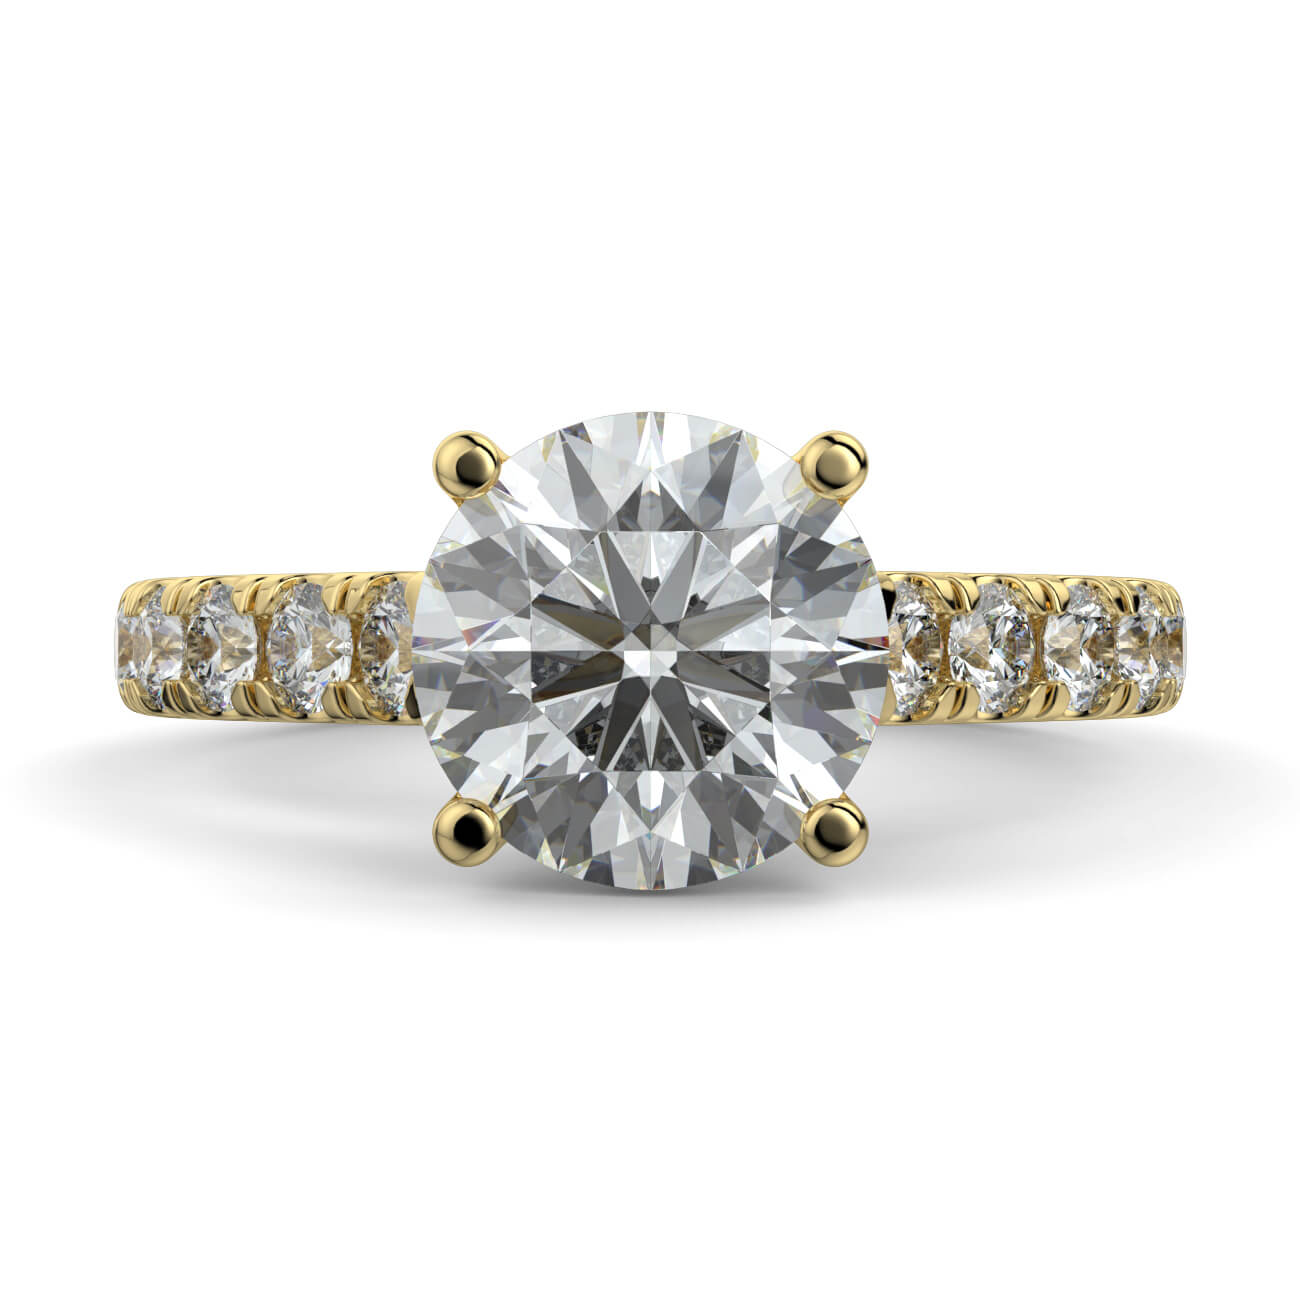 Round Brilliant Cut Diamond Engagement Ring In 18k Yellow Gold – Australian Diamond Network